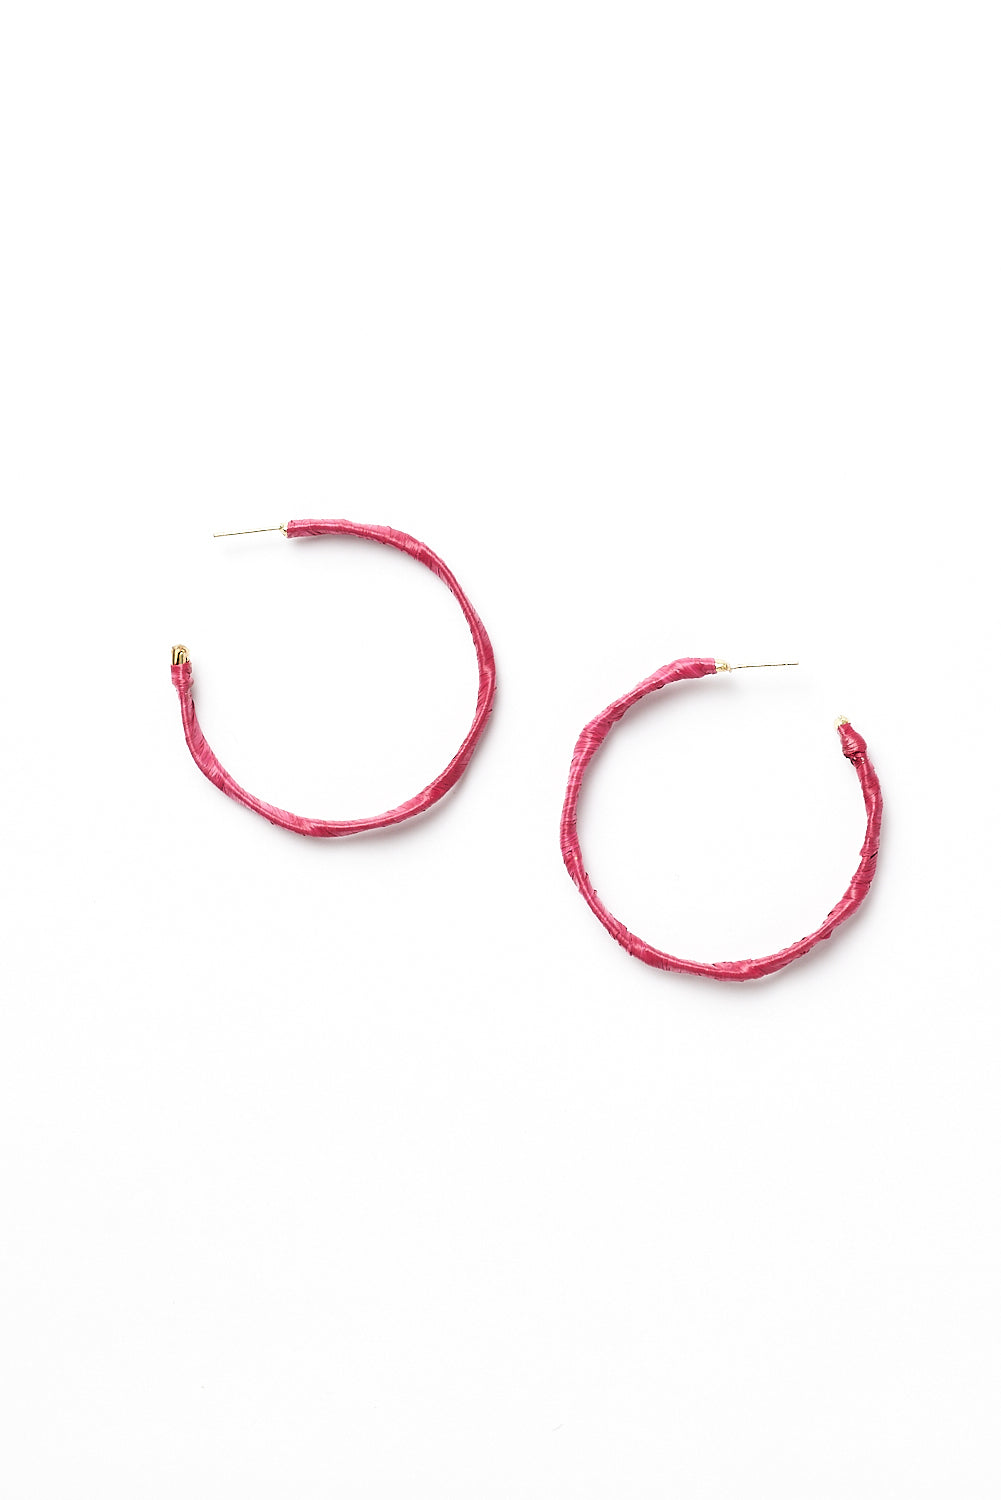 Sicily Earrings in Hot Pink